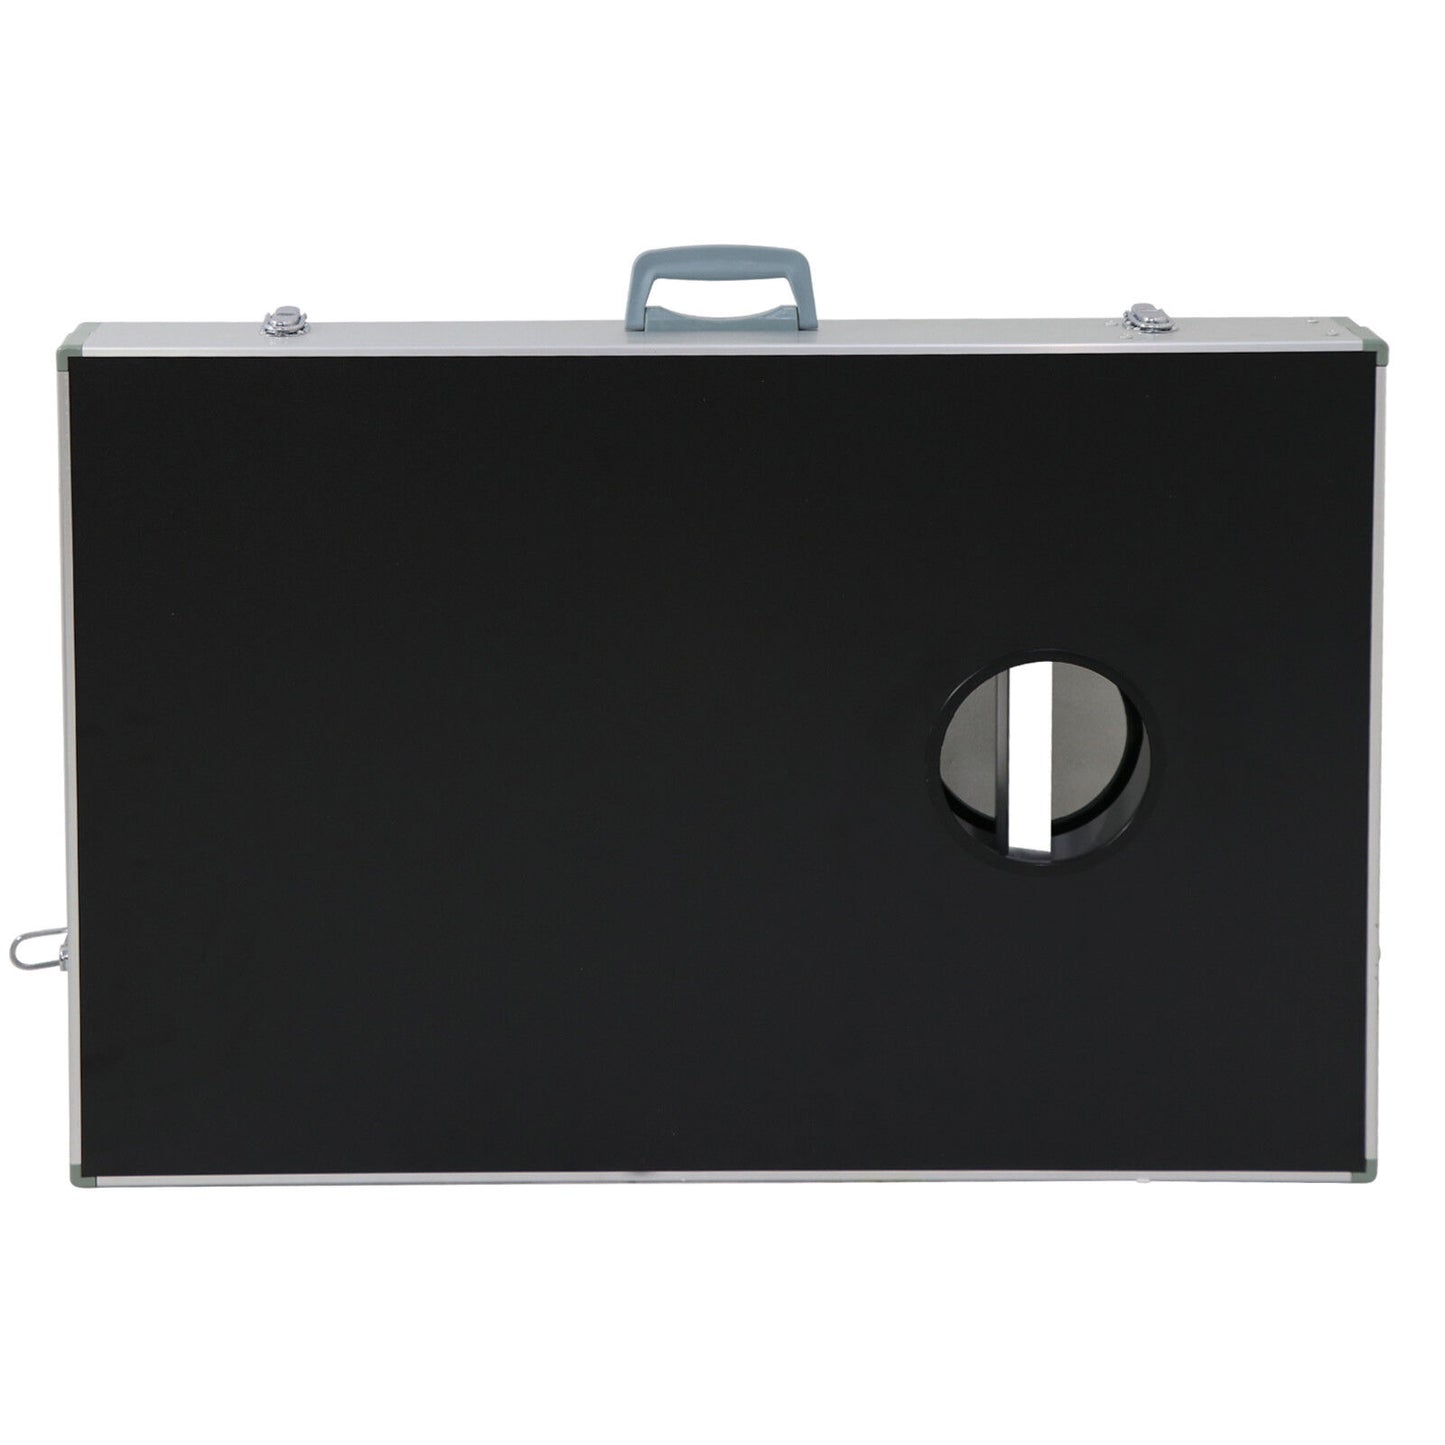 CornHole Bean Bag Toss Game Set Aluminum Frame Portable Design W/ Carrying Case